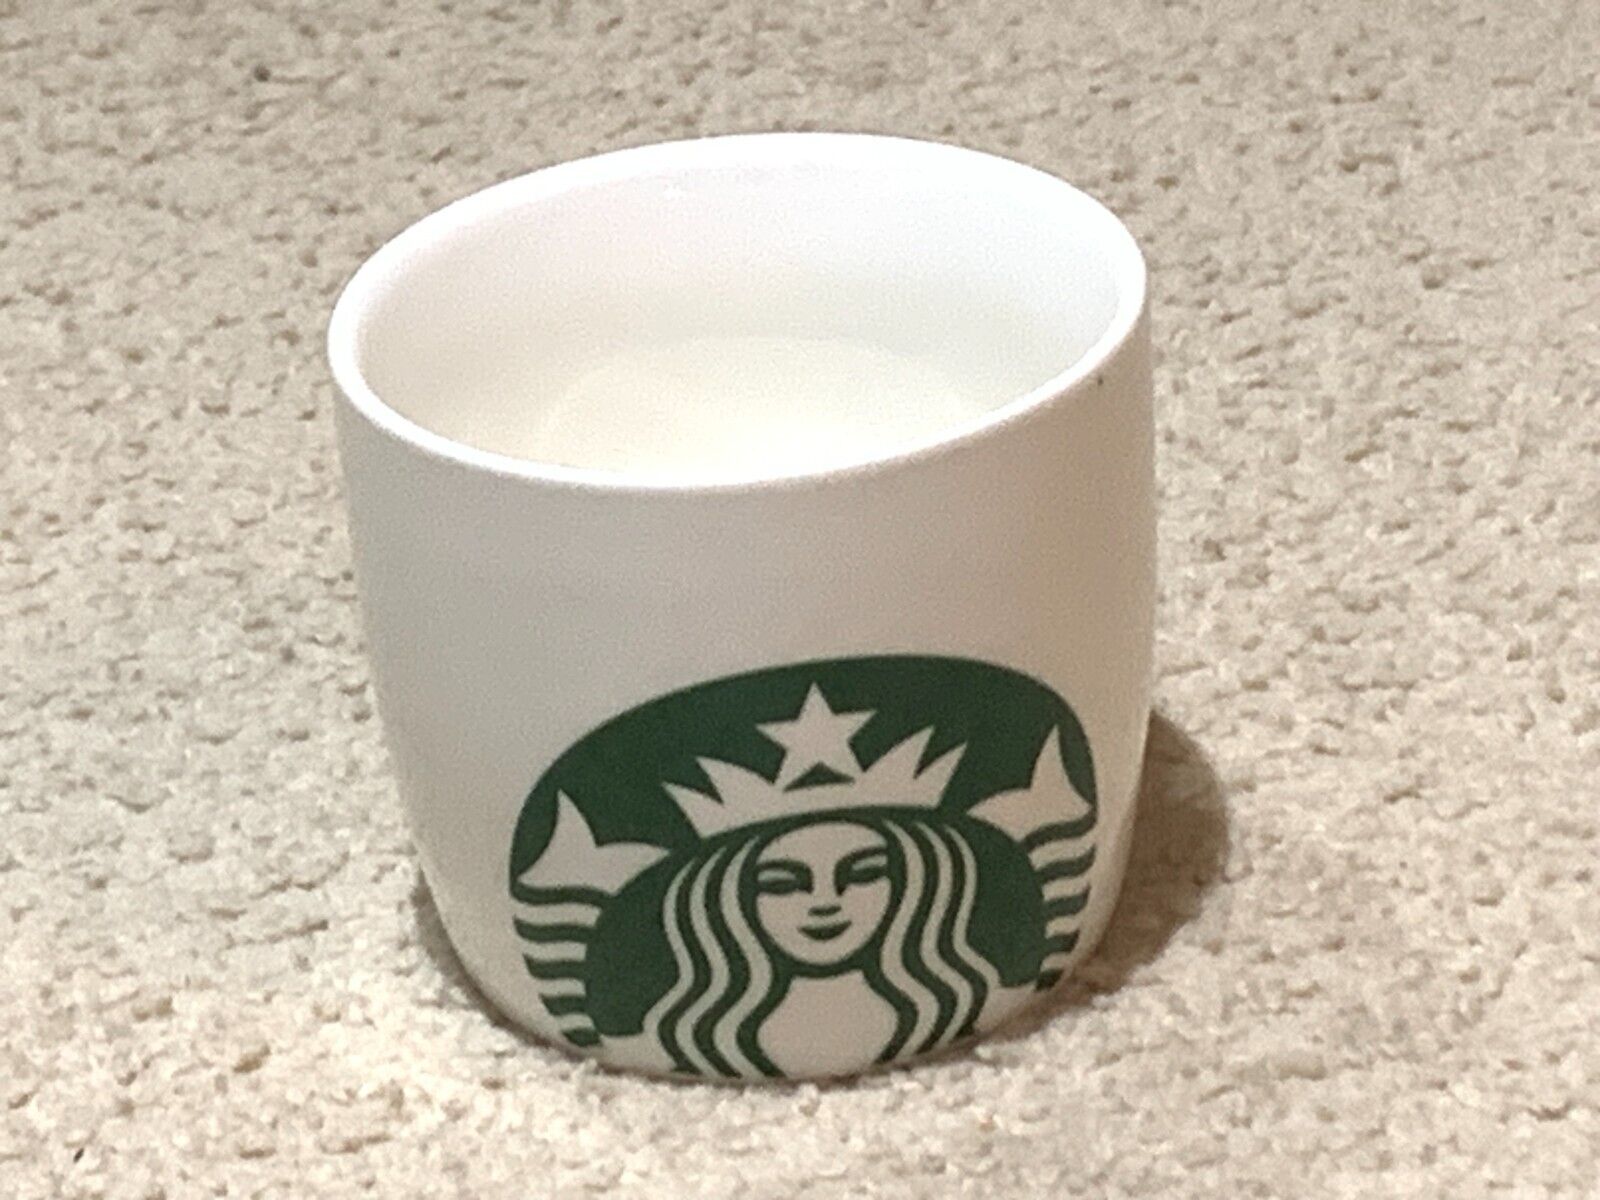 Starbucks 2014 Coffee Cup Mug 16 Oz Green Mermaid Logo Ceramic